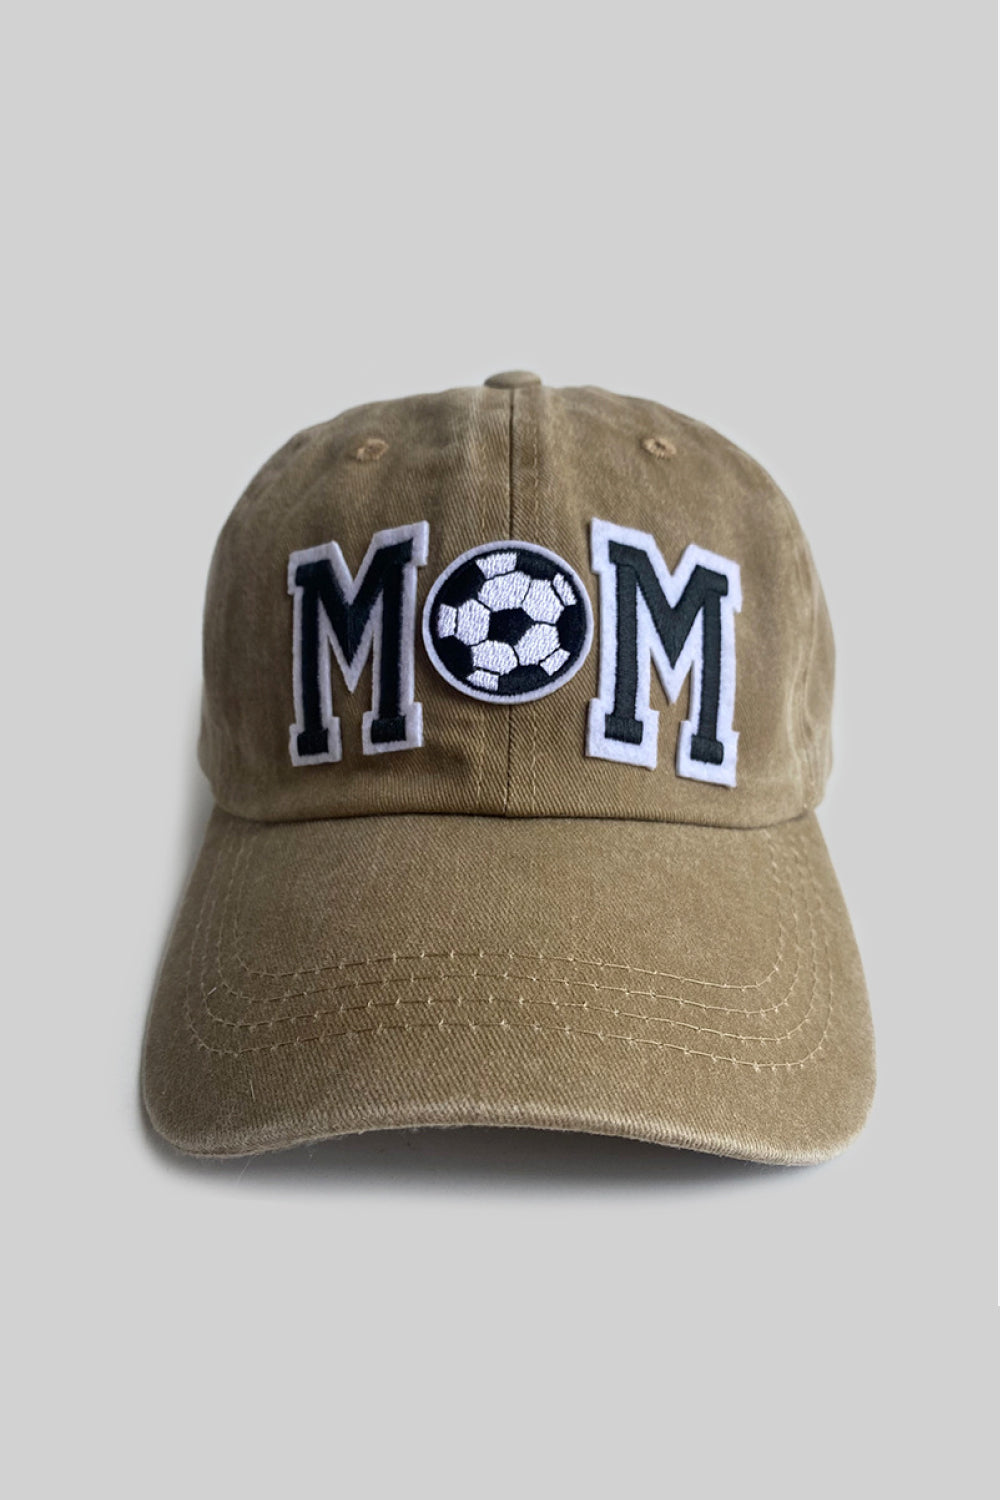 SOCCER MOM Distressed Baseball Style Cap Hat